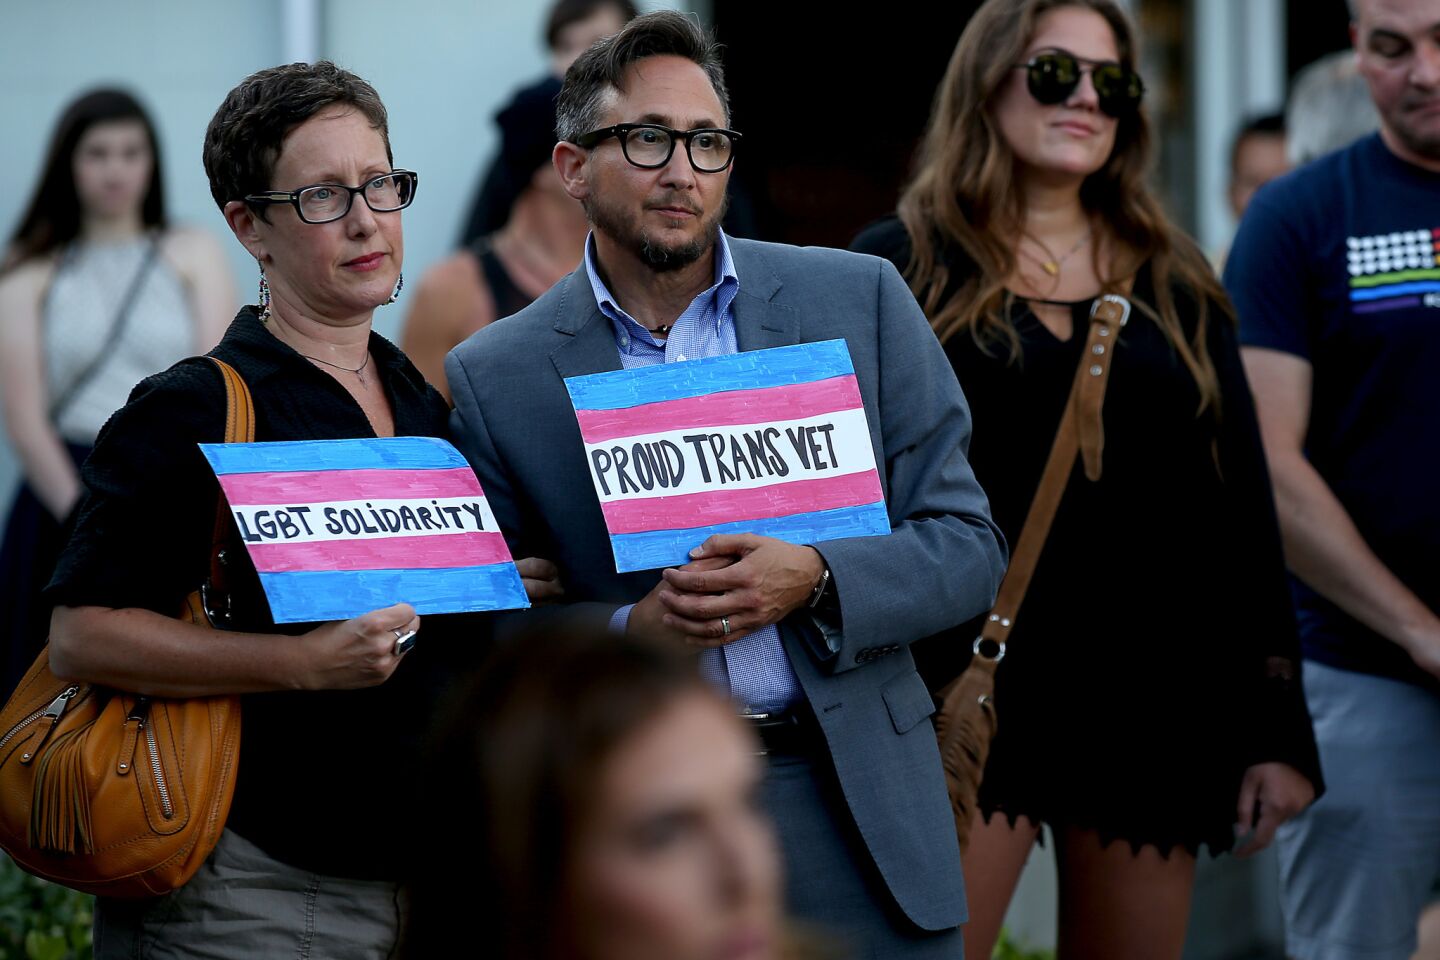 Protesting Trump's transgender military ban